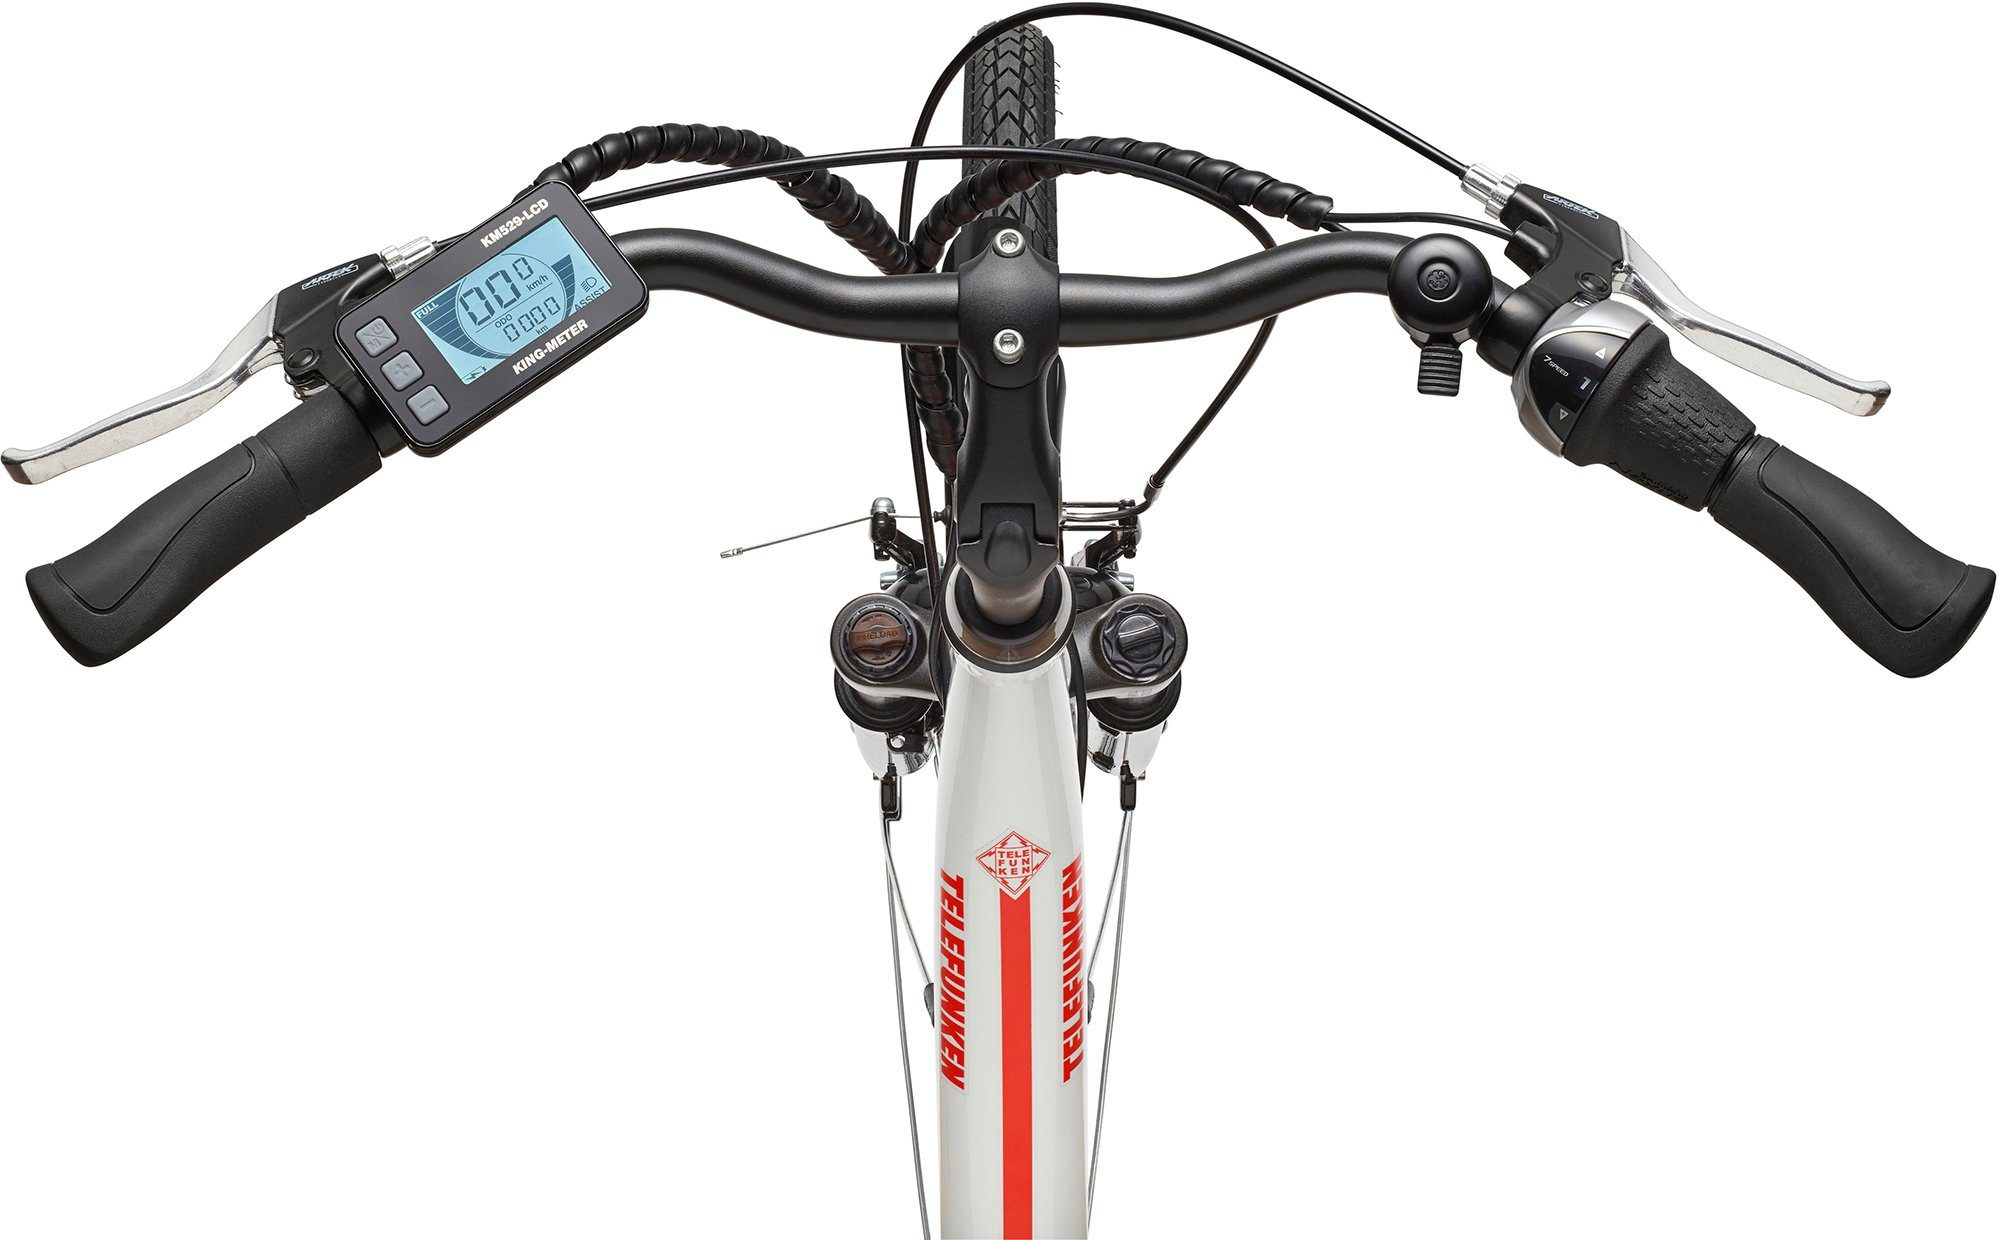 Mittelmotor, Nexus Gang Damen 468 Shimano E-Bike 7 Multitalent RC890, ebike Schaltwerk, Wh Batterie, Telefunken